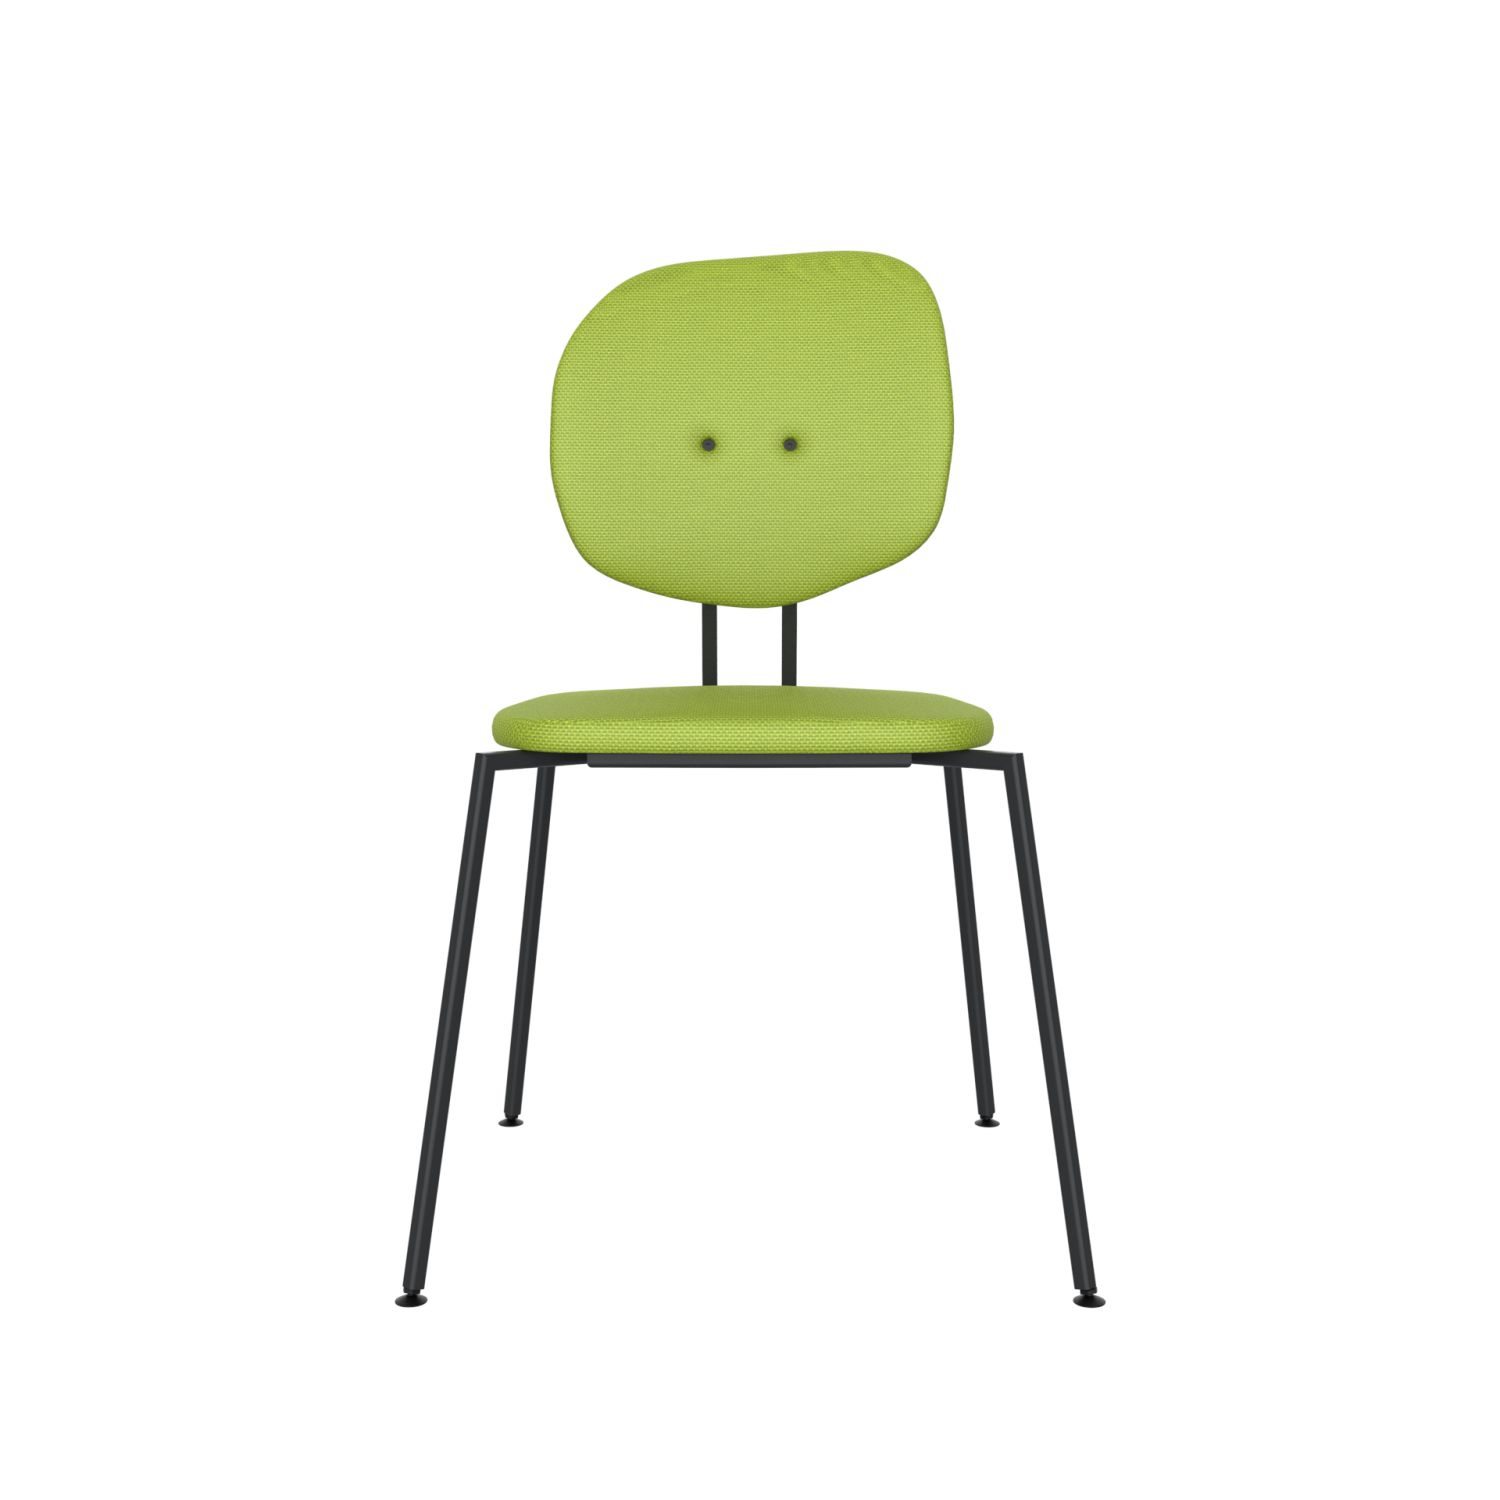 lensvelt maarten baas chair 141 stackable without armrests backrest h fairway green 020 black ral9005 hard leg ends